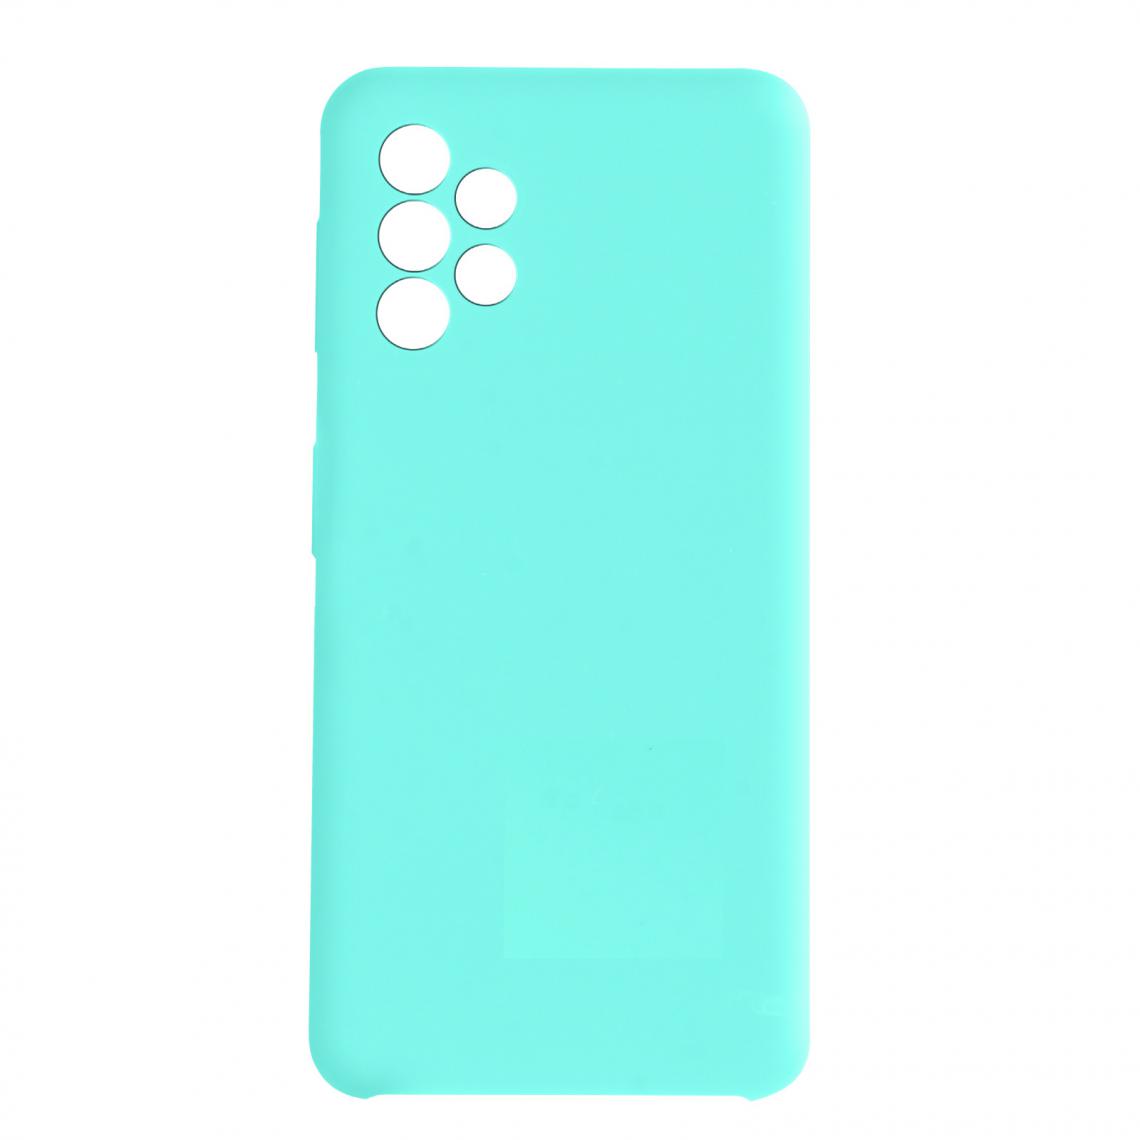 Avizar - Coque Samsung A52 et A52 5G Silicone Semi-rigide Collection Venus turquoise - Coque, étui smartphone